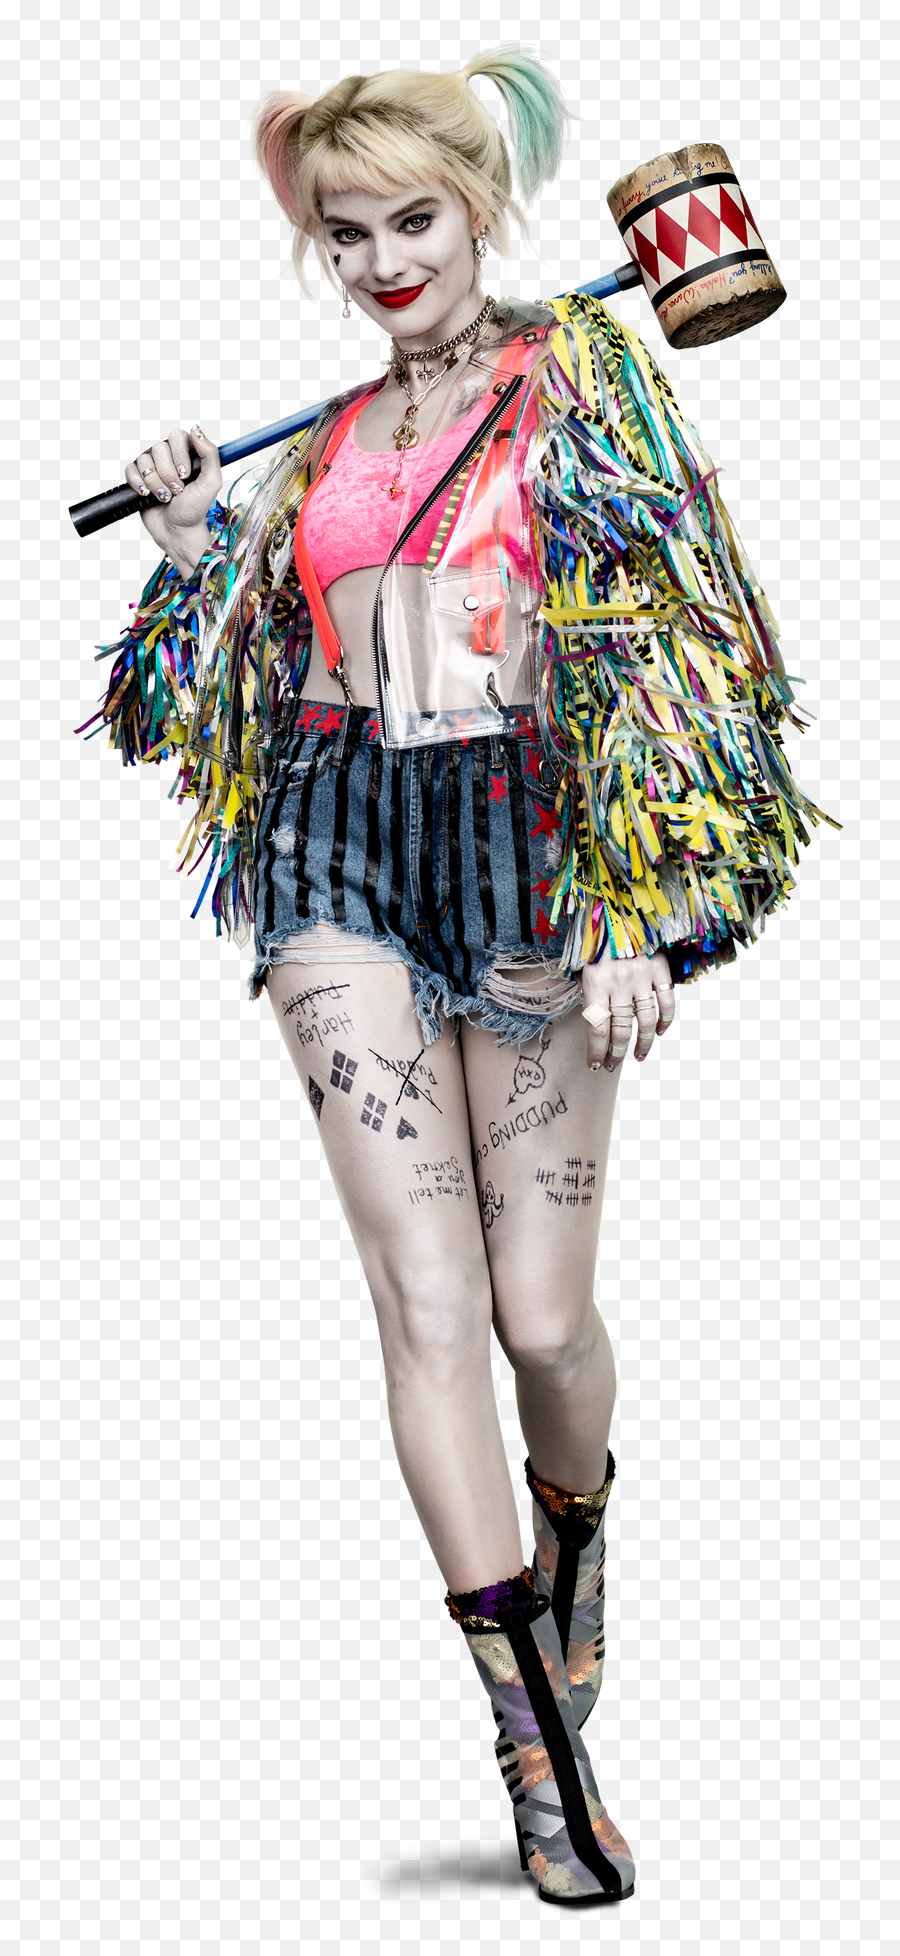 Harley Quinn Extended Universe - Birds Of Prey Wallpaper Mobile Emoji,Harley Quinn Shirts All Of Her Emotions